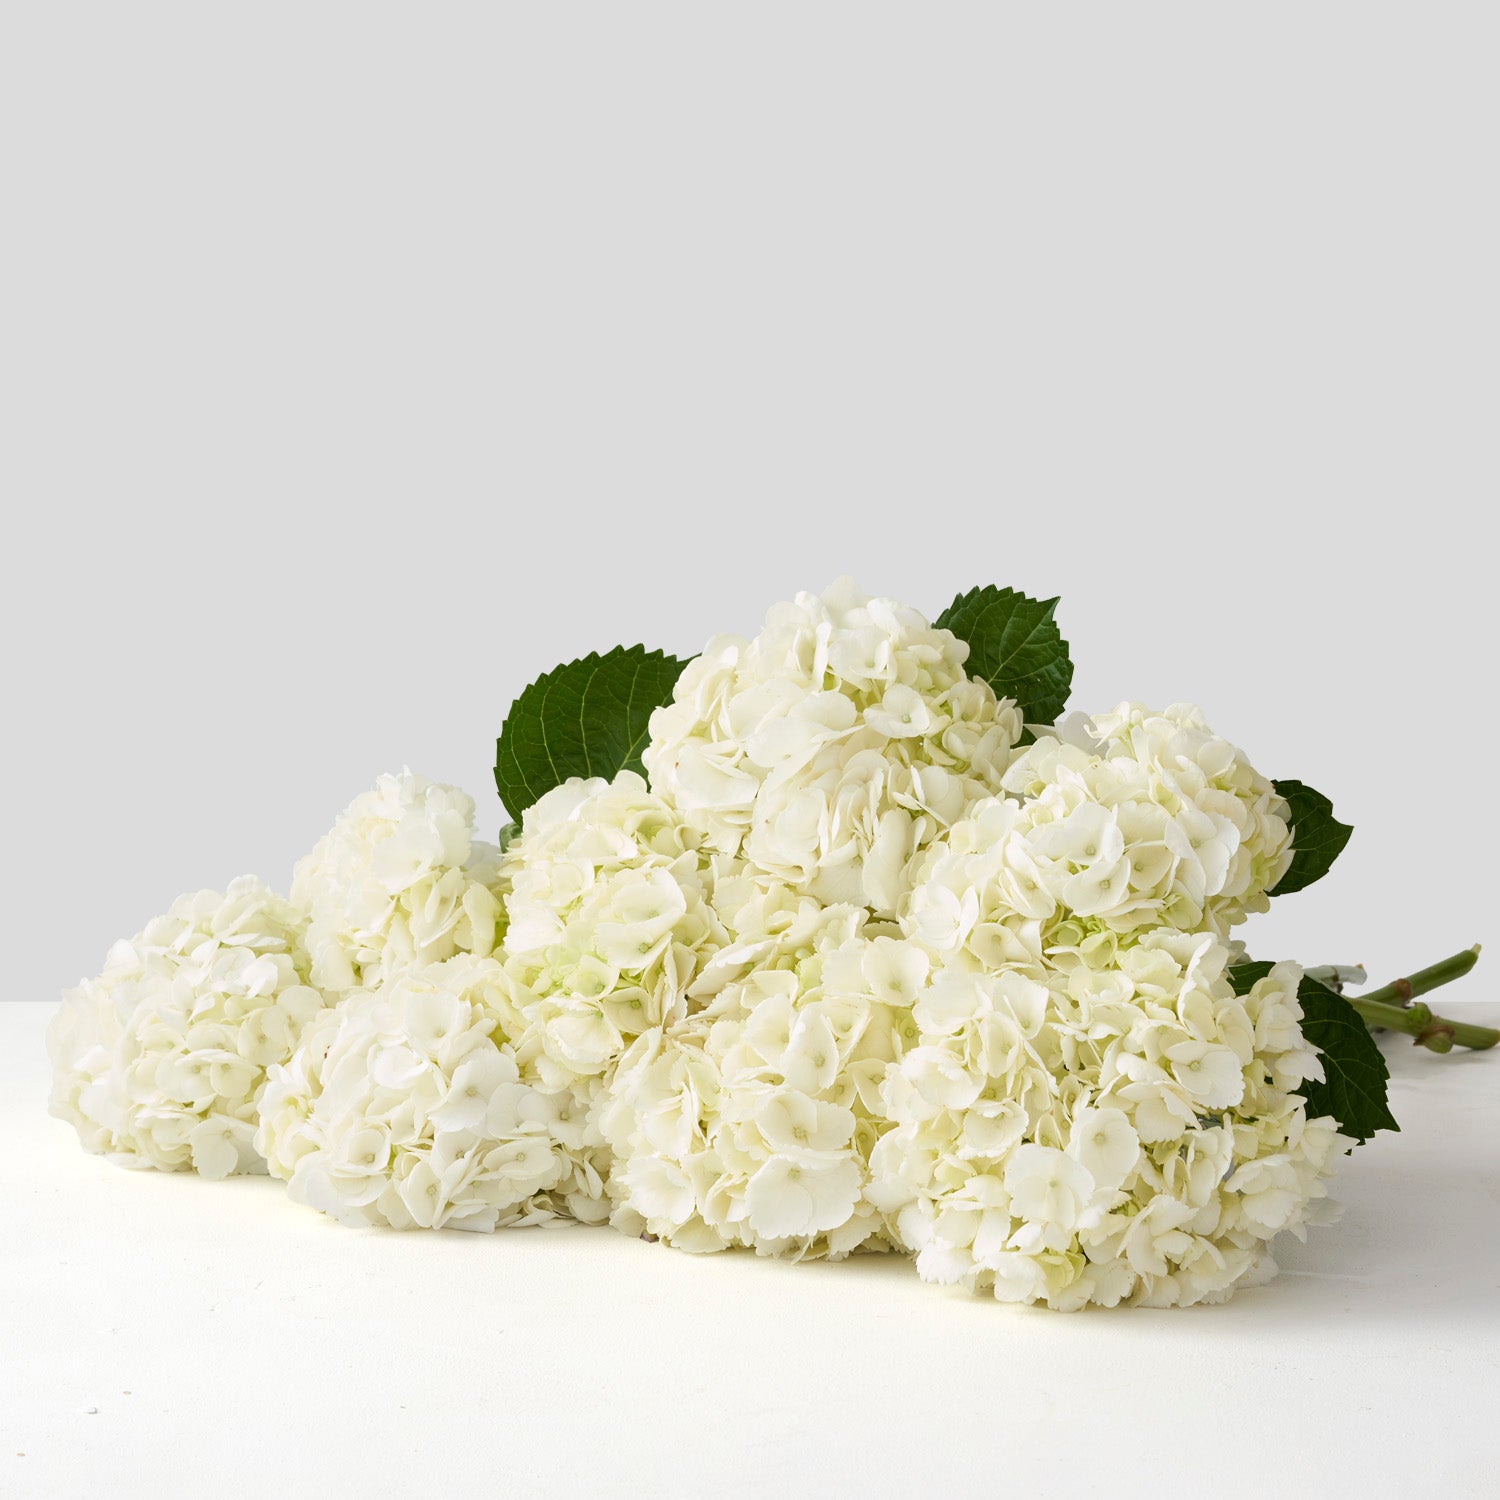 Large bouquet of white hydrangea on white background.